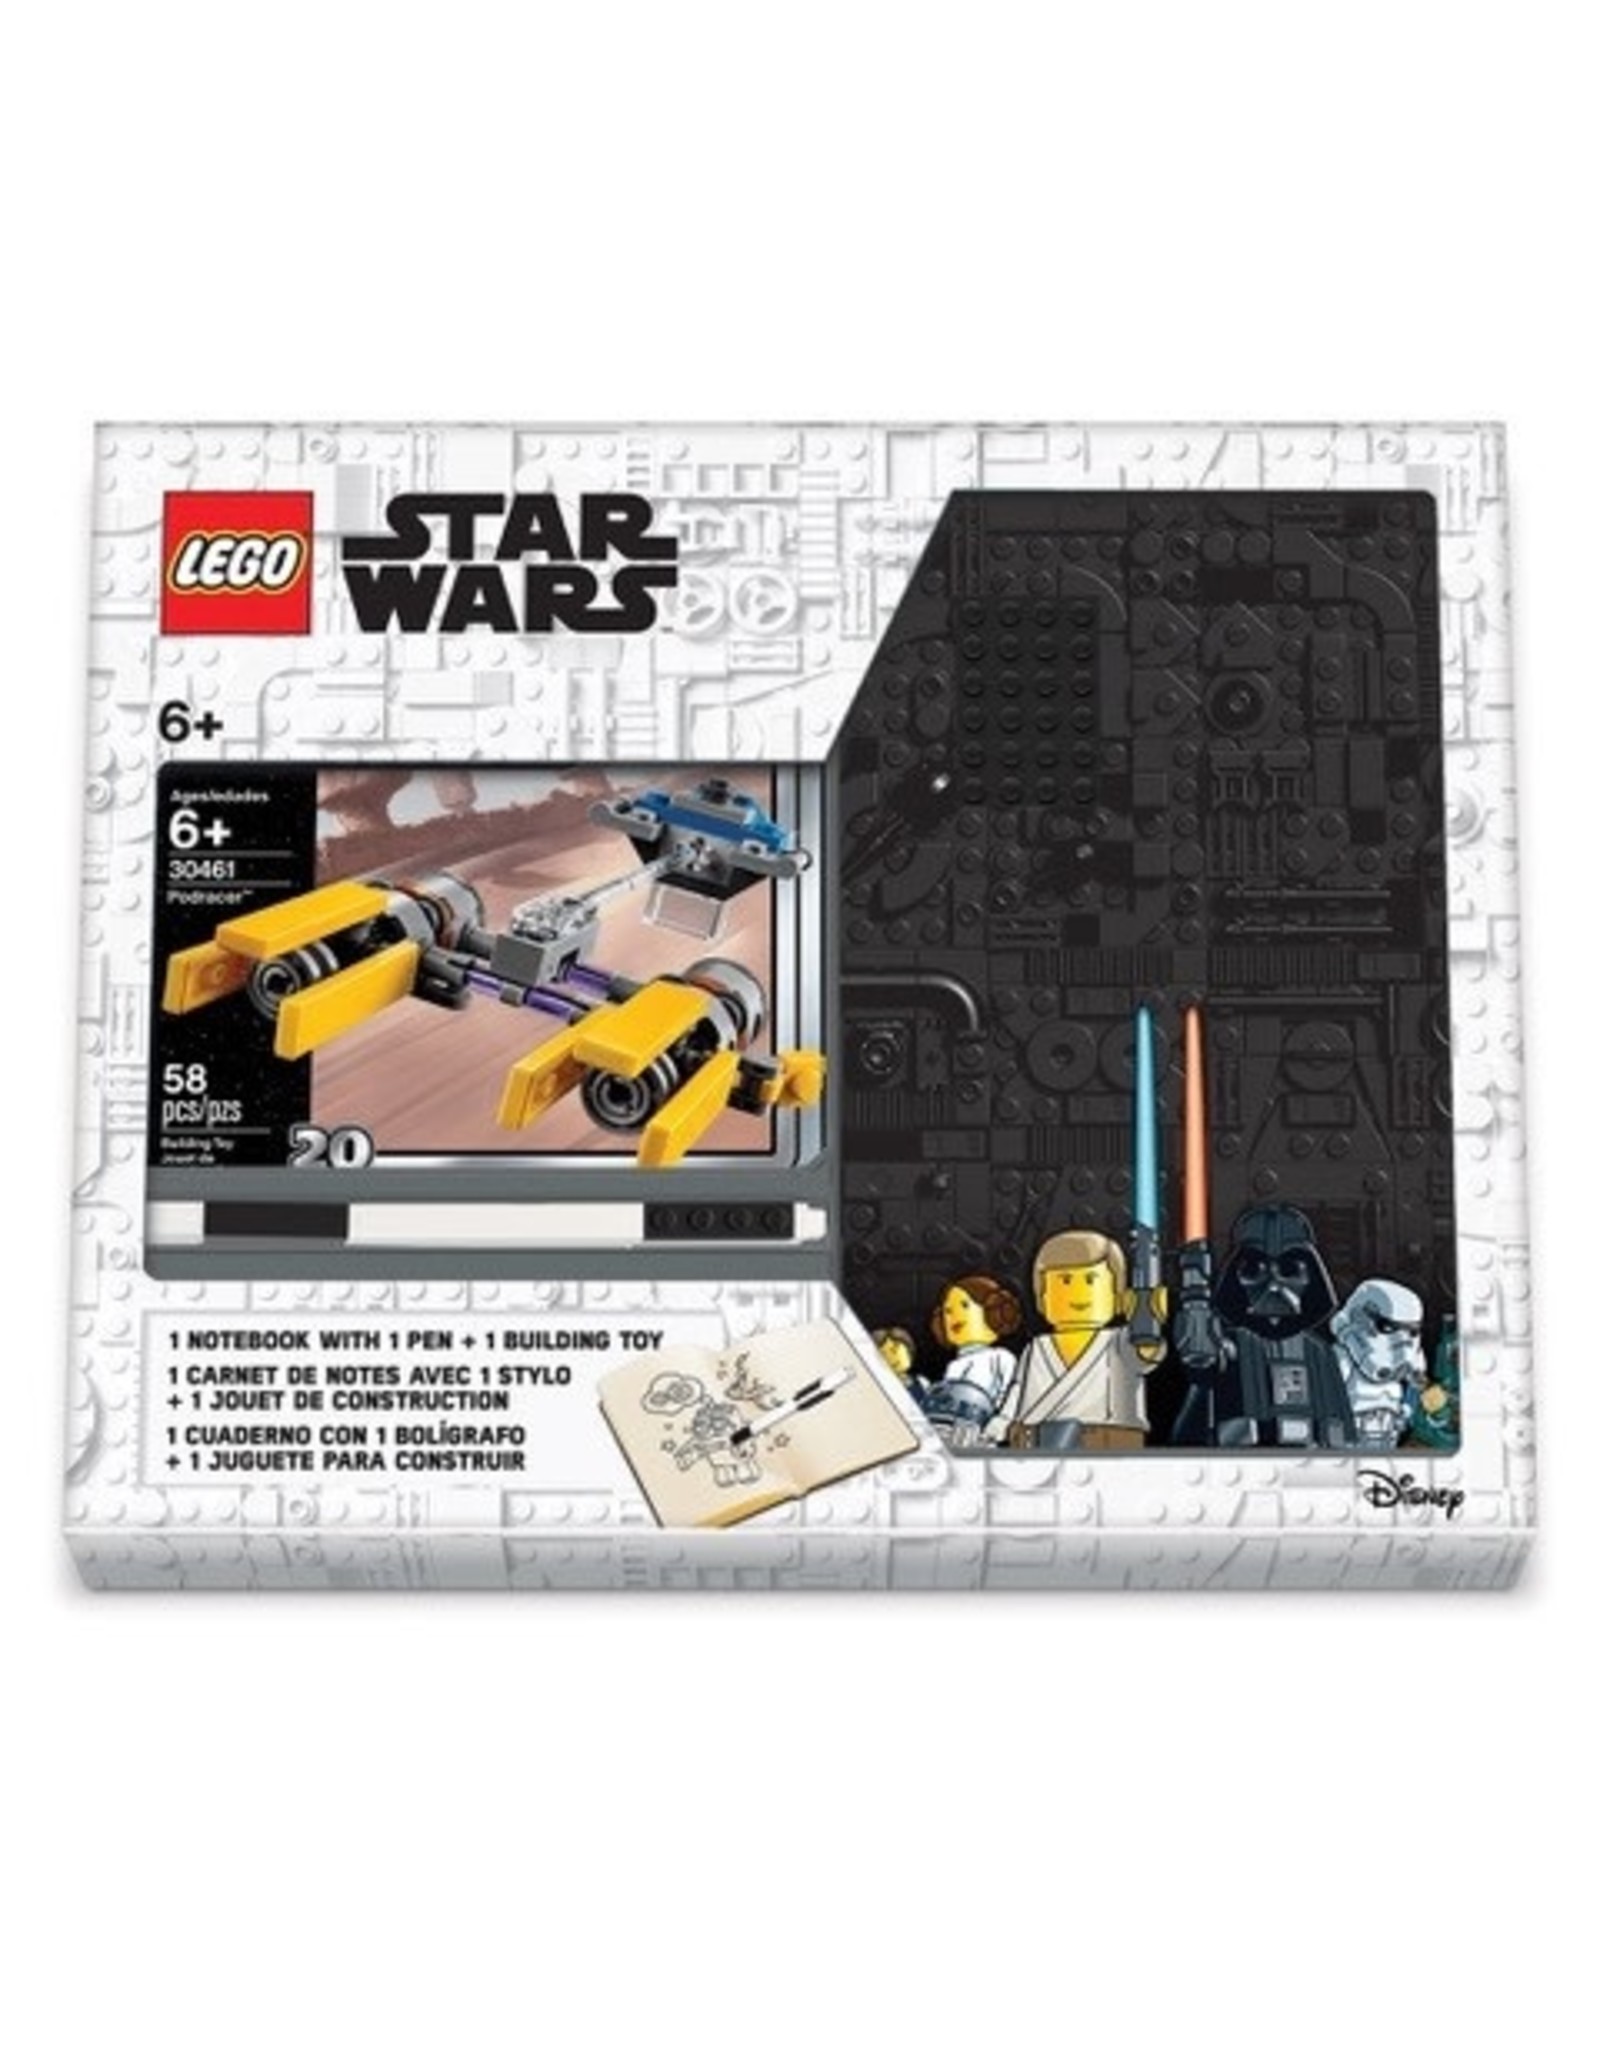 Lego LEGO Star Wars Notebook  w/Pen+building toy